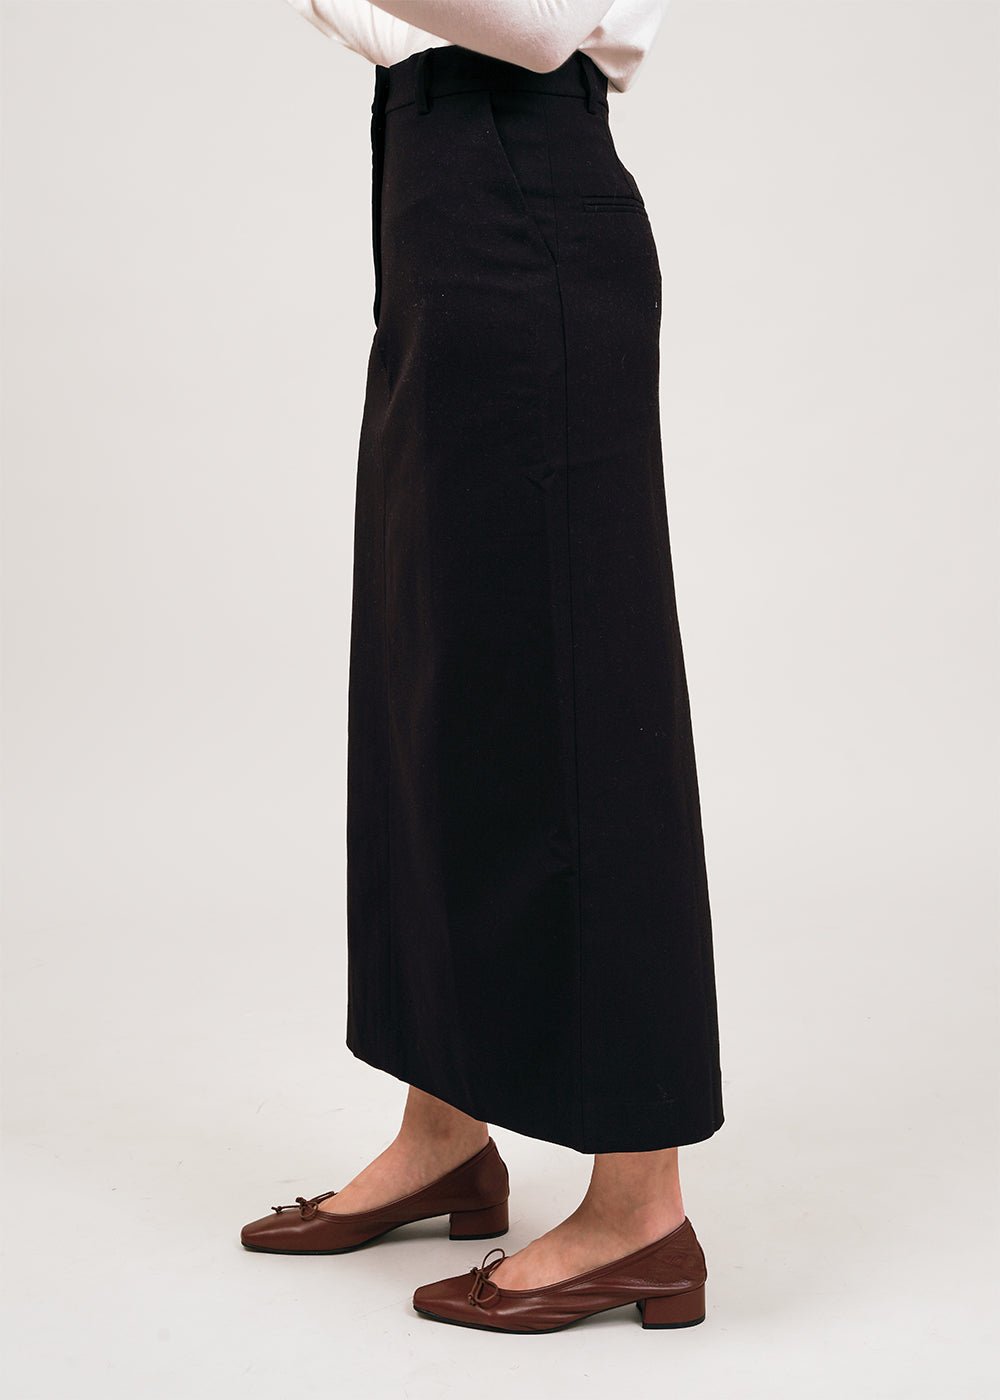 Mijeong Park Black Wool Blend Midi Skirt - New Classics Studios Sustainable Ethical Fashion Canada